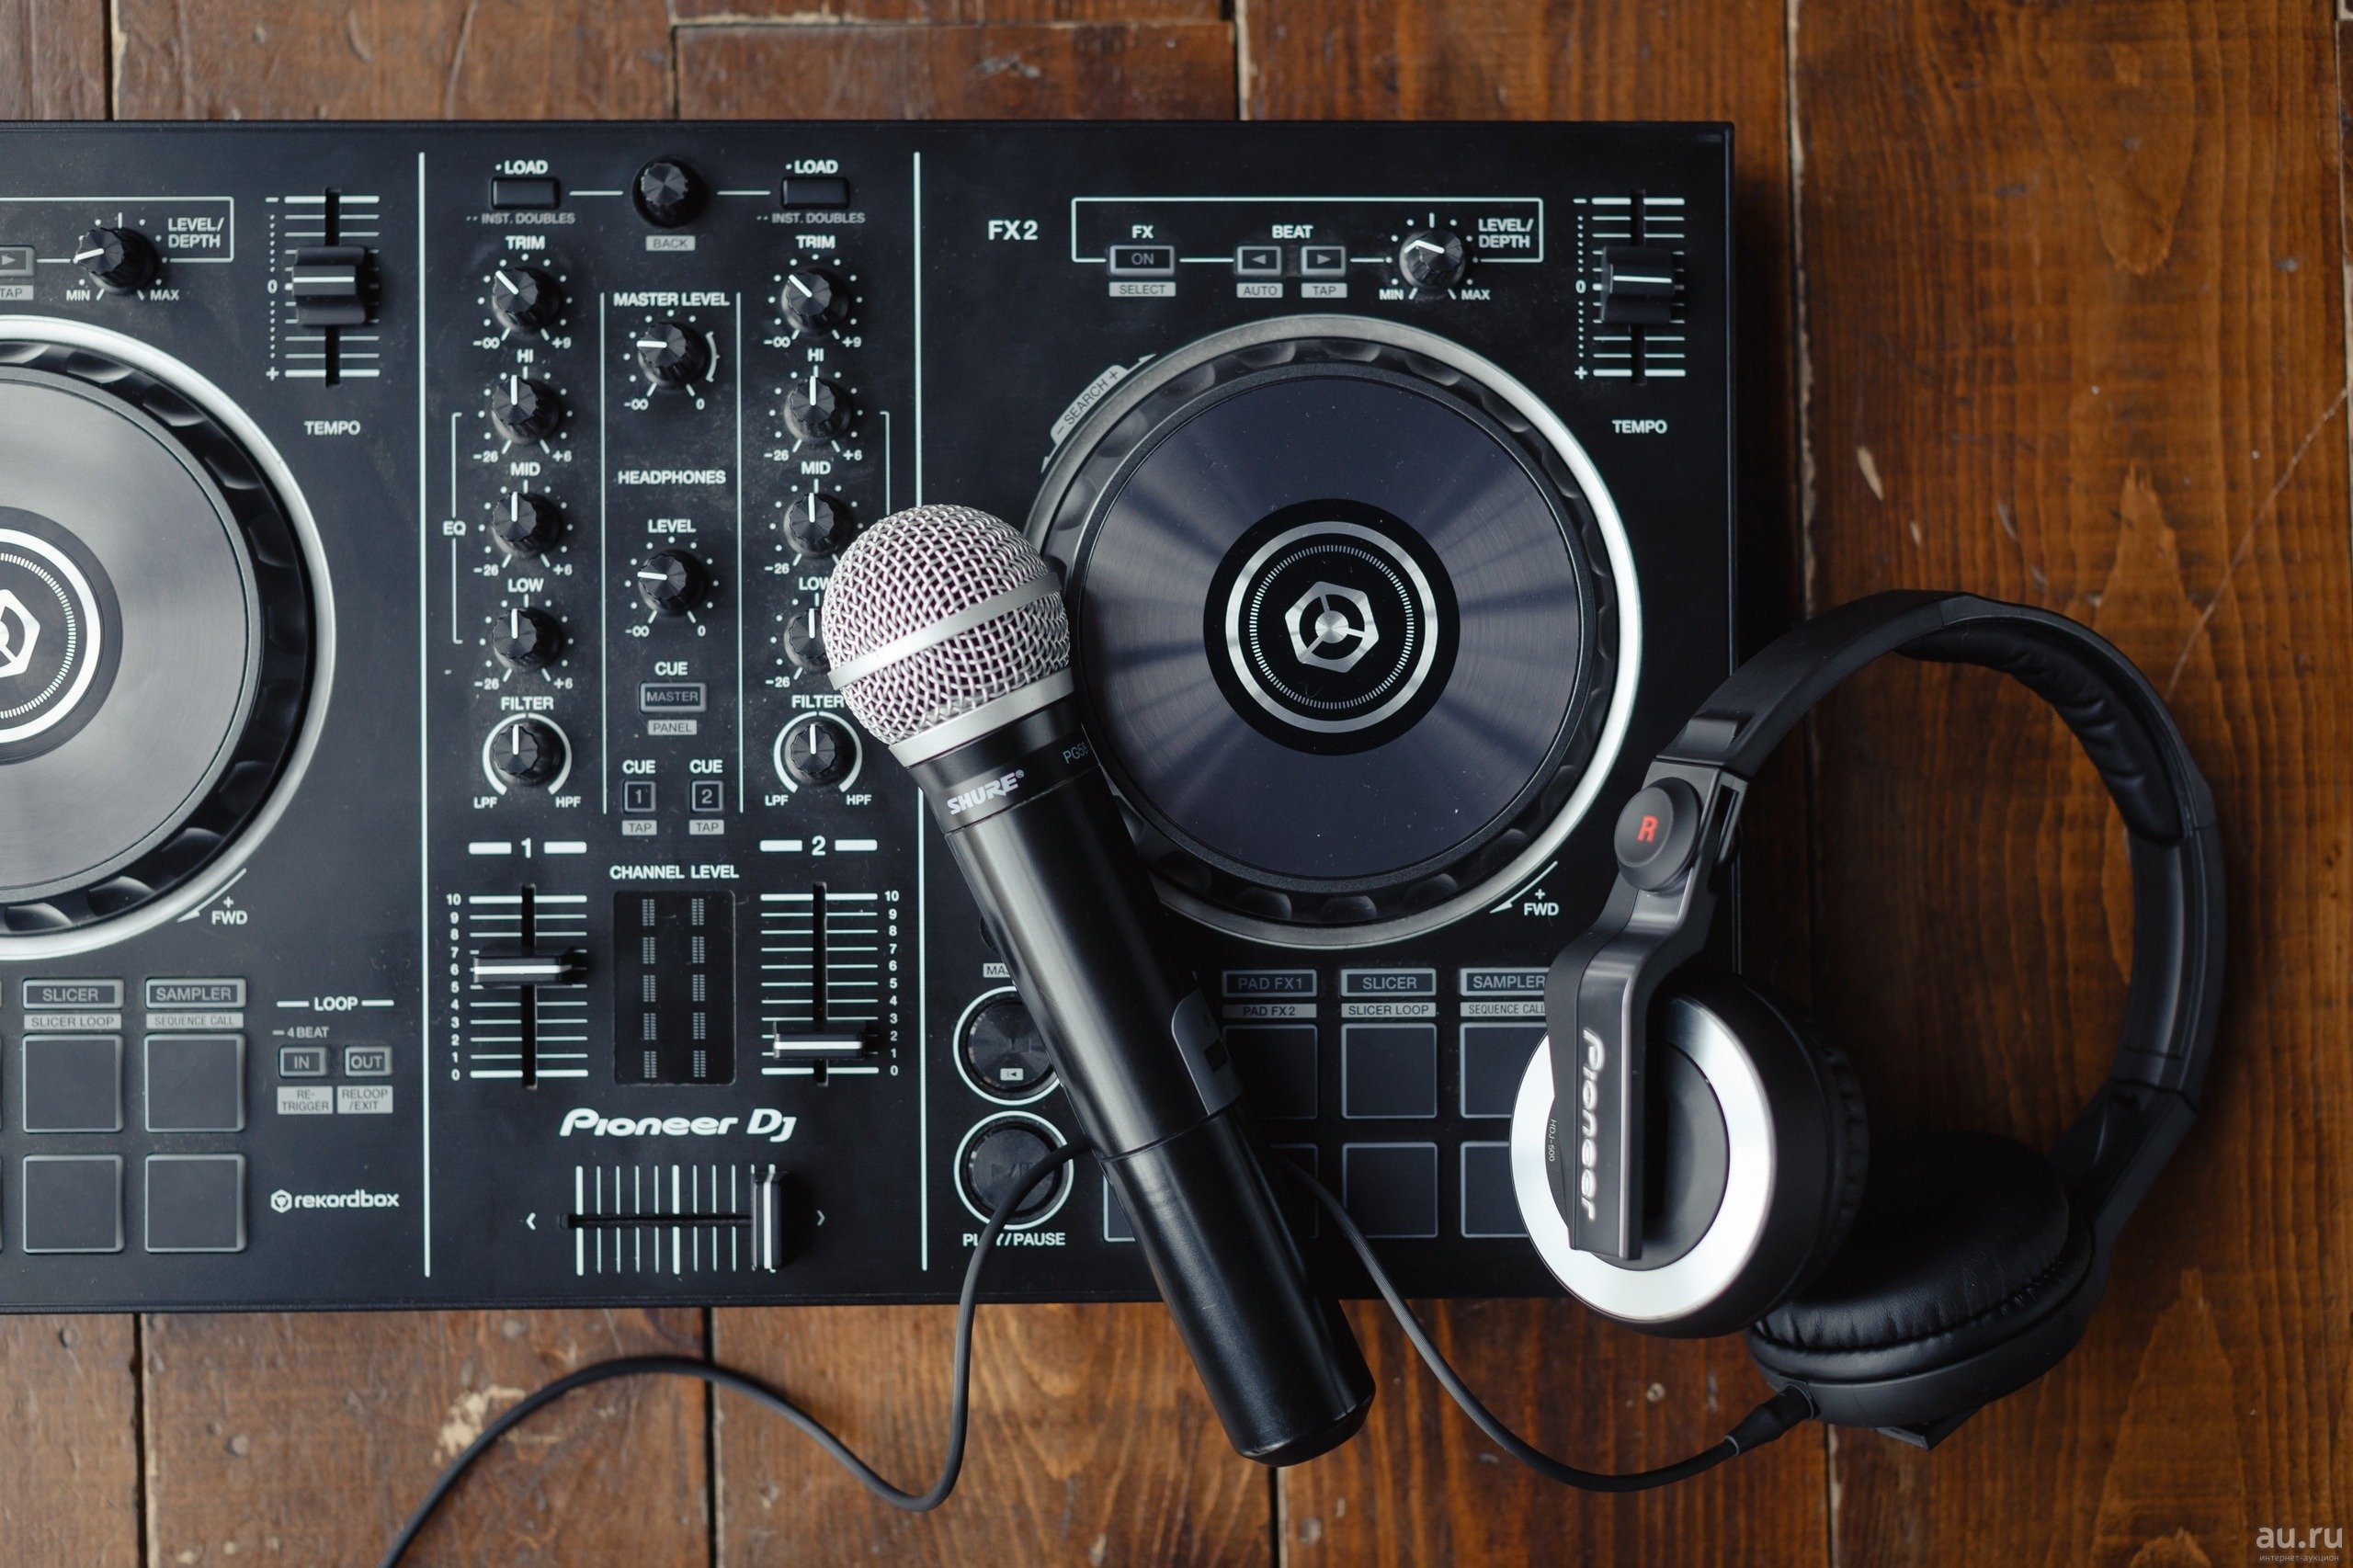 Features to consider when choosing a starter-level DJ controller